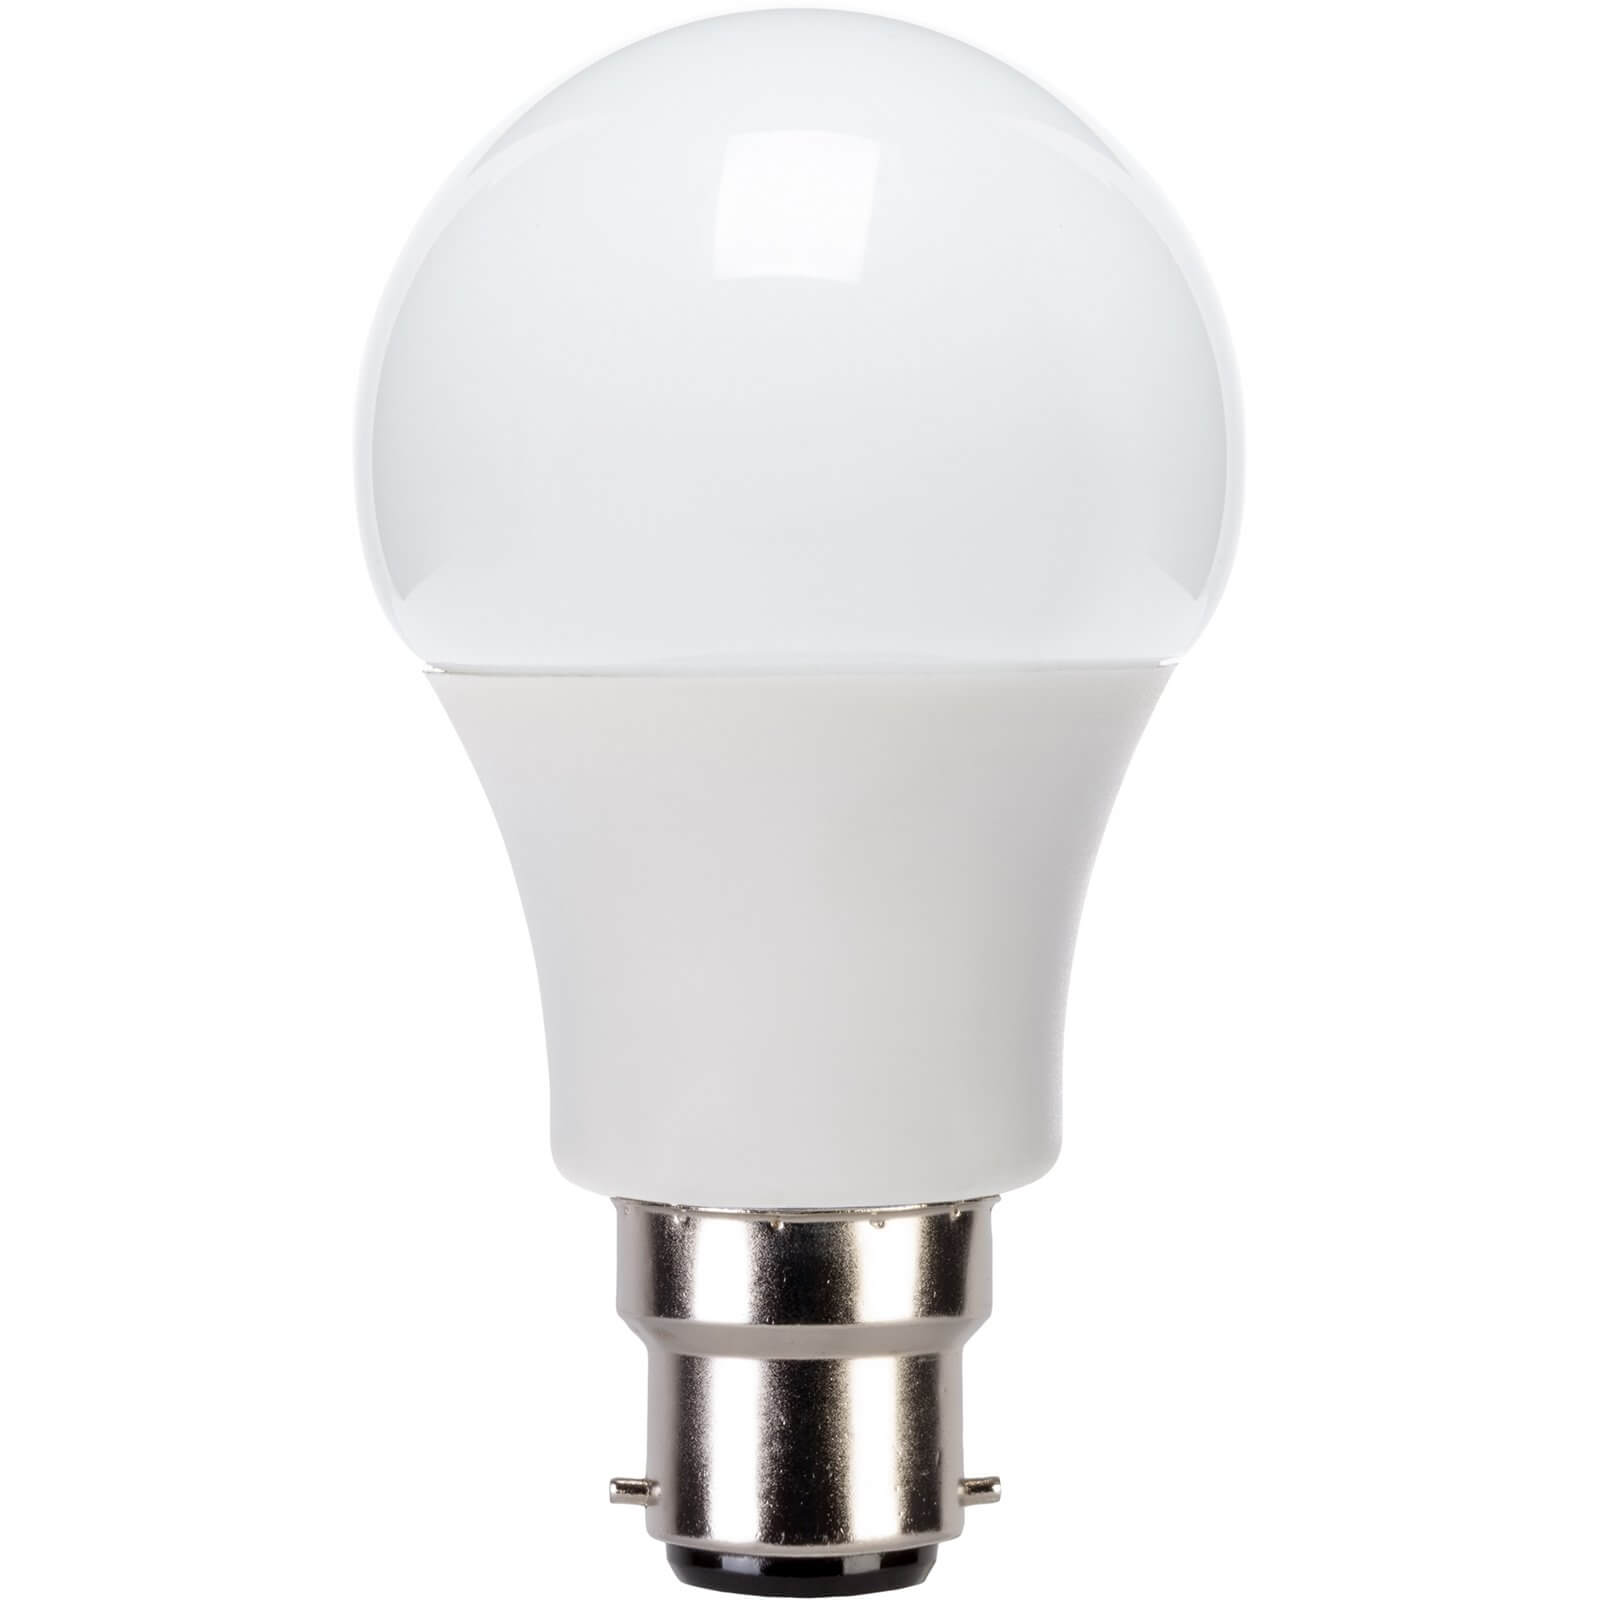 Photo of Smart Led A-lamp Rgb Remote 3w B22 White Light Bulb